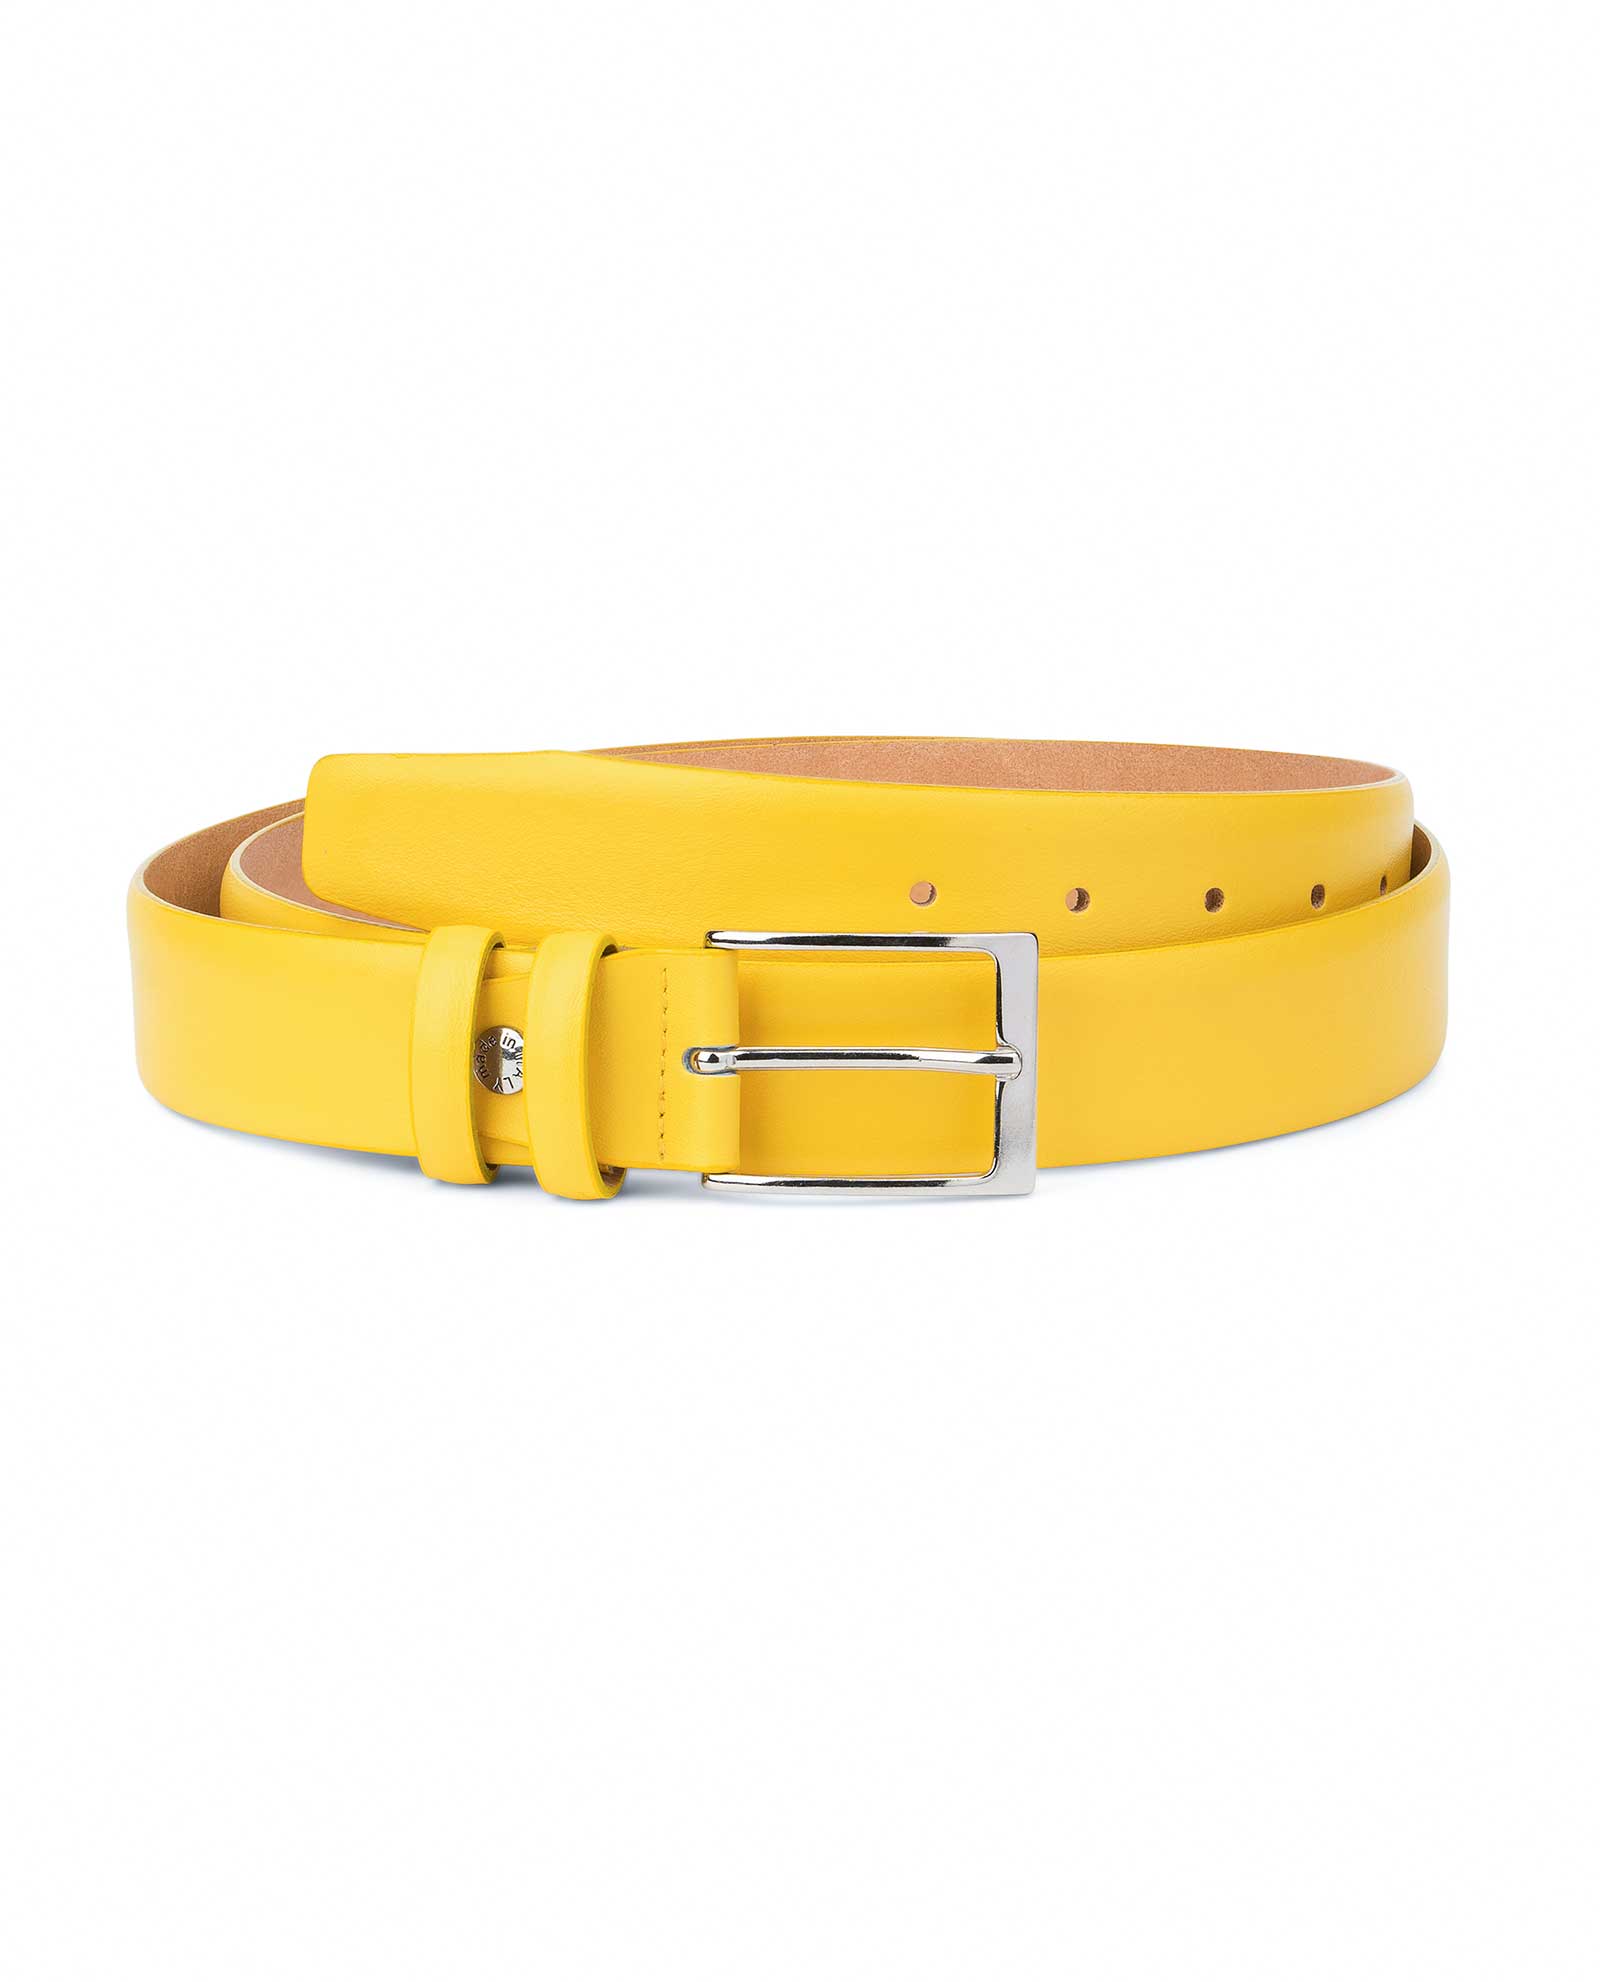 Buy Men's Yellow Leather Belt | Smooth | LeatherBeltsOnline.com